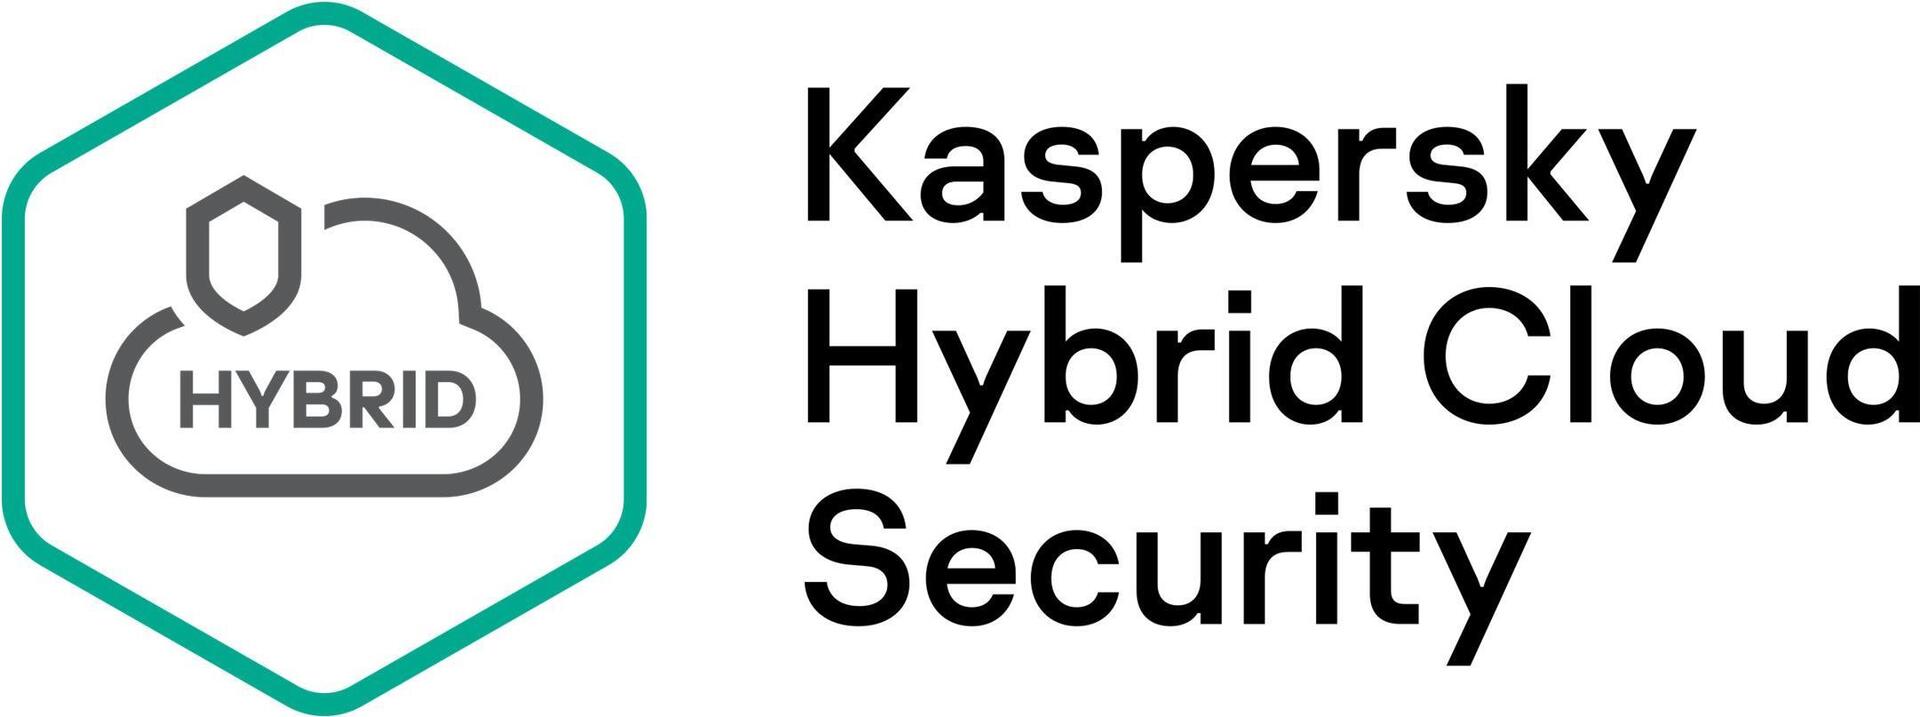 Kaspersky Hybrid Cloud Security Enterprise CPU European Edi. 5-9 CPU 3-Year Base License (KL4553XAETS)